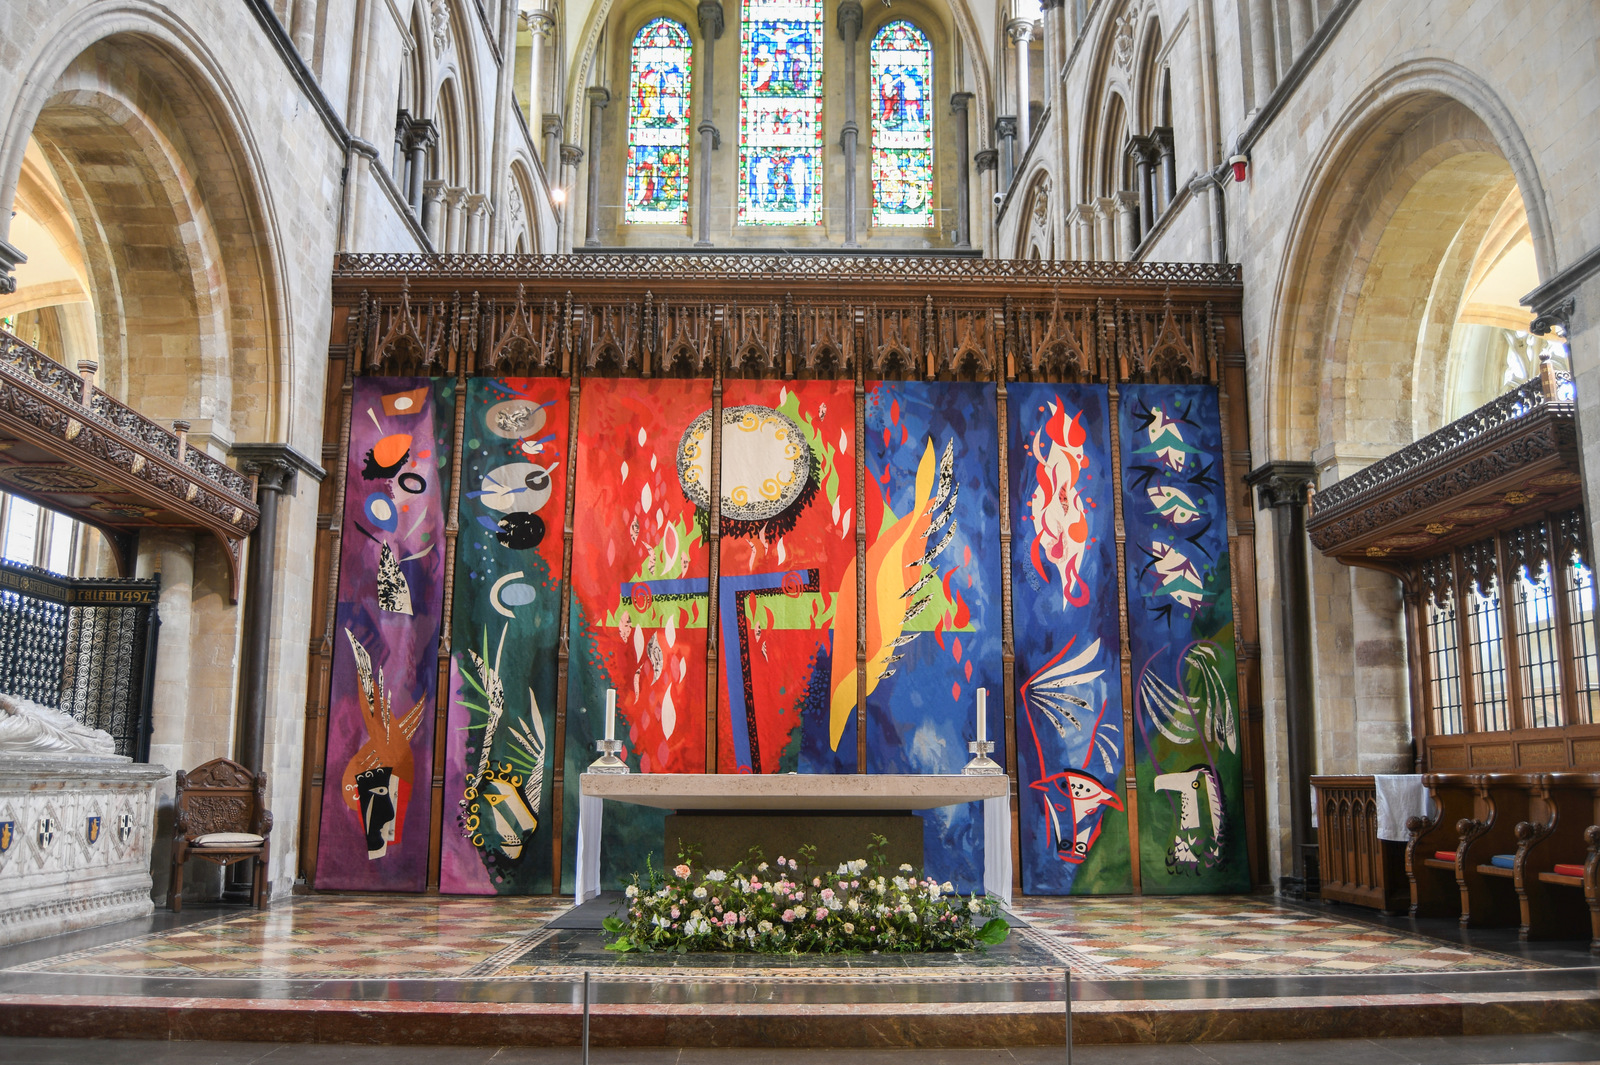 High Altar, Piper tapestry